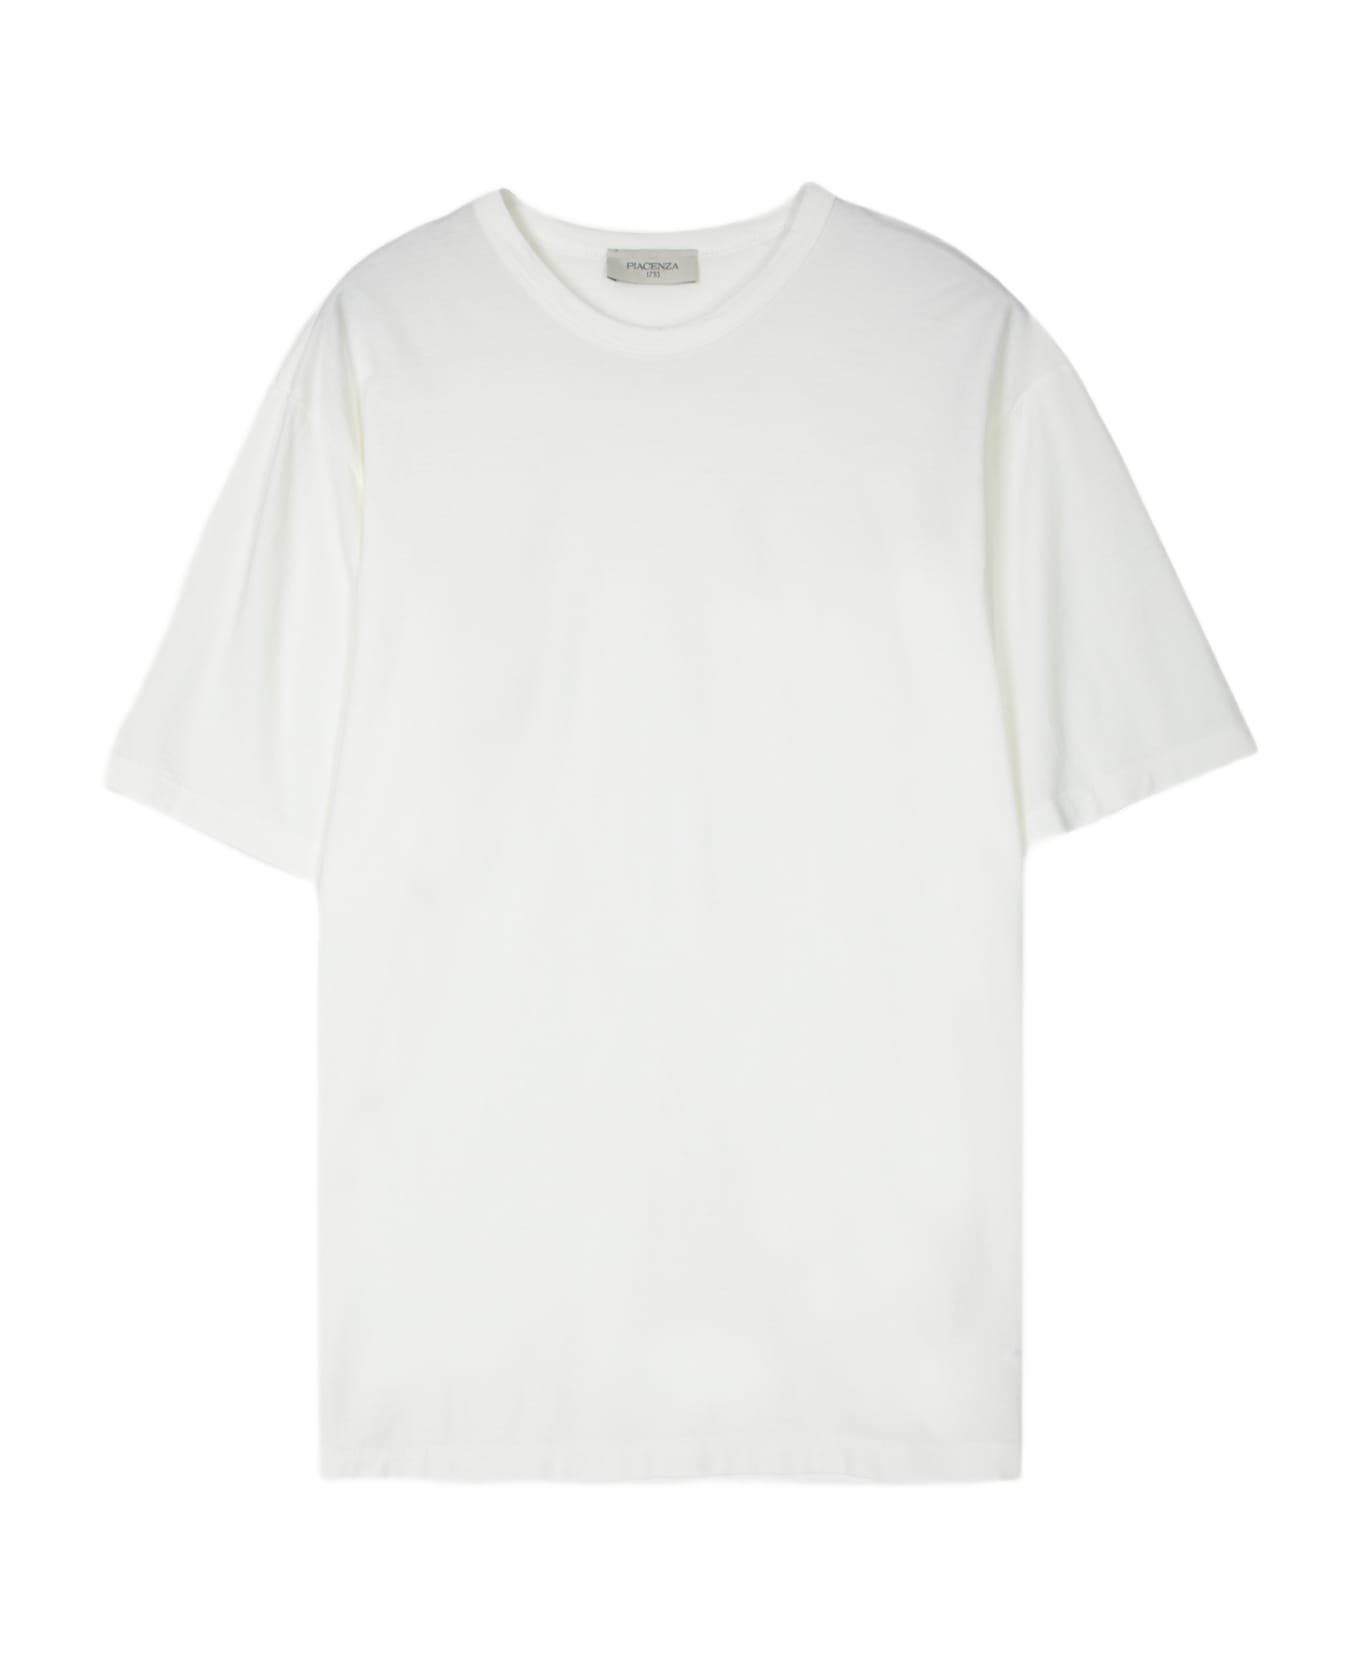 Piacenza Cashmere T-shirt White lightweight cotton t-shirt - Bianco